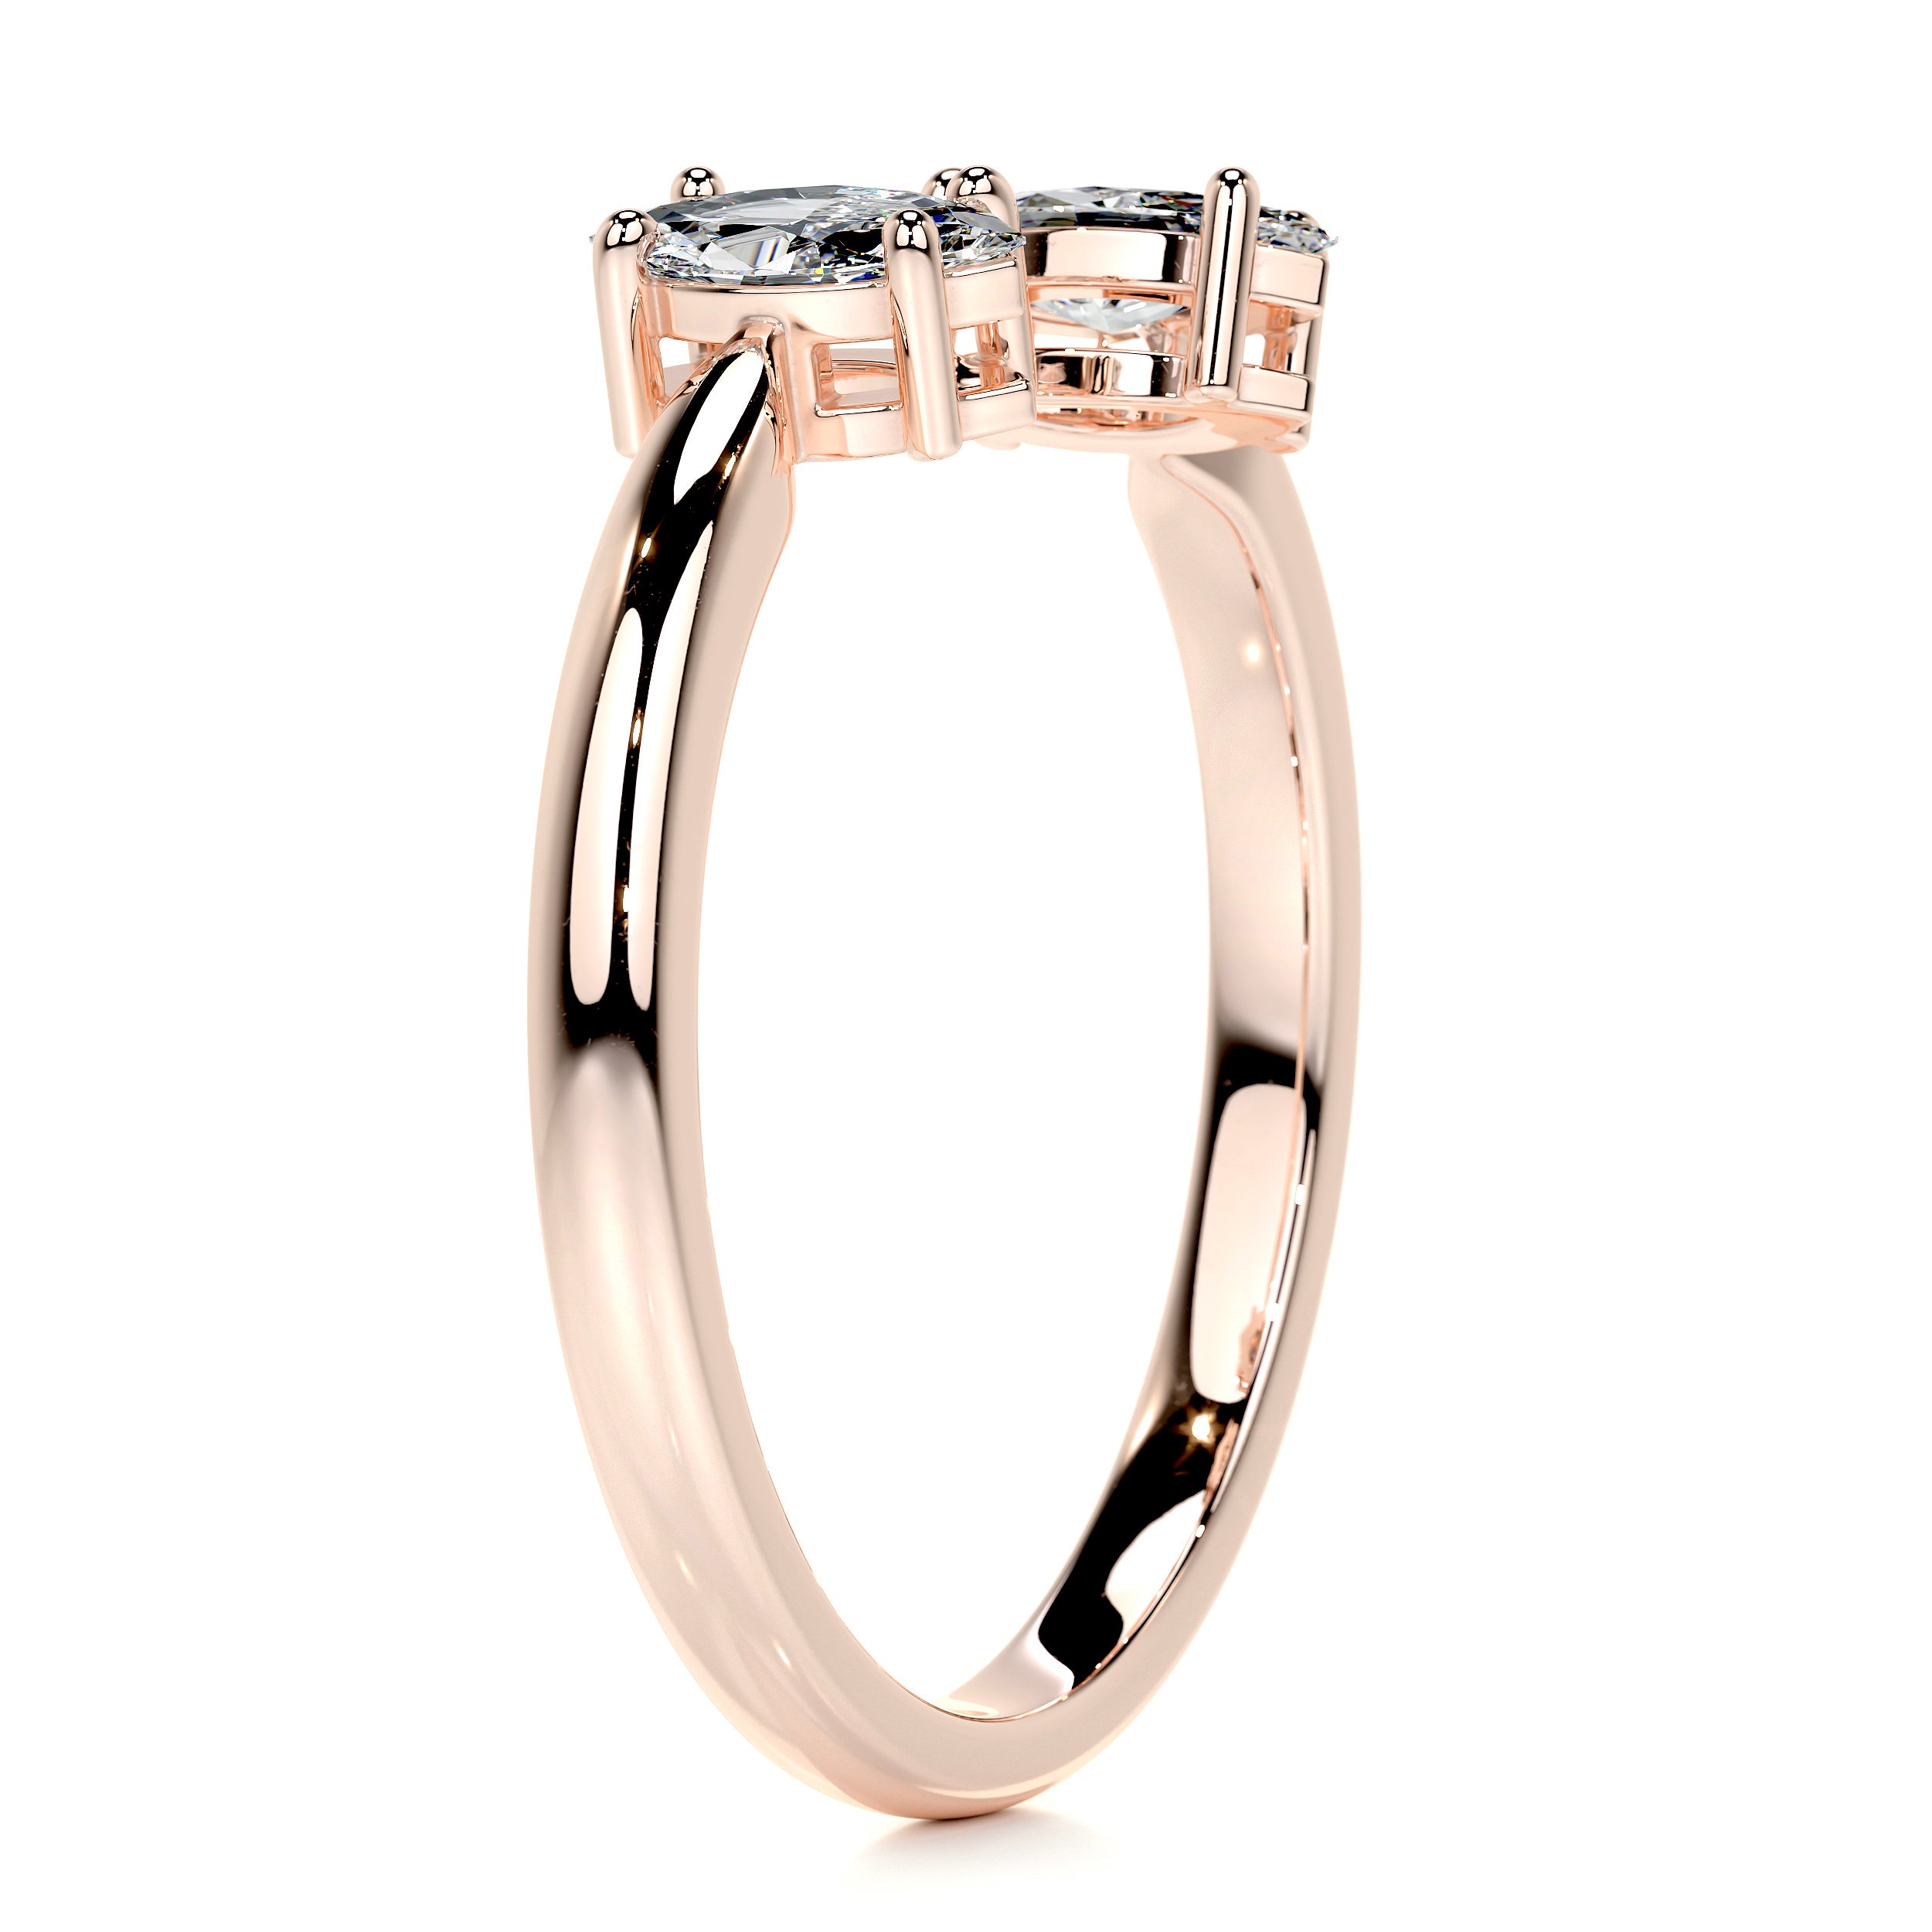 Celine Fashion Ring   (0.36 Carat) -14K Rose Gold